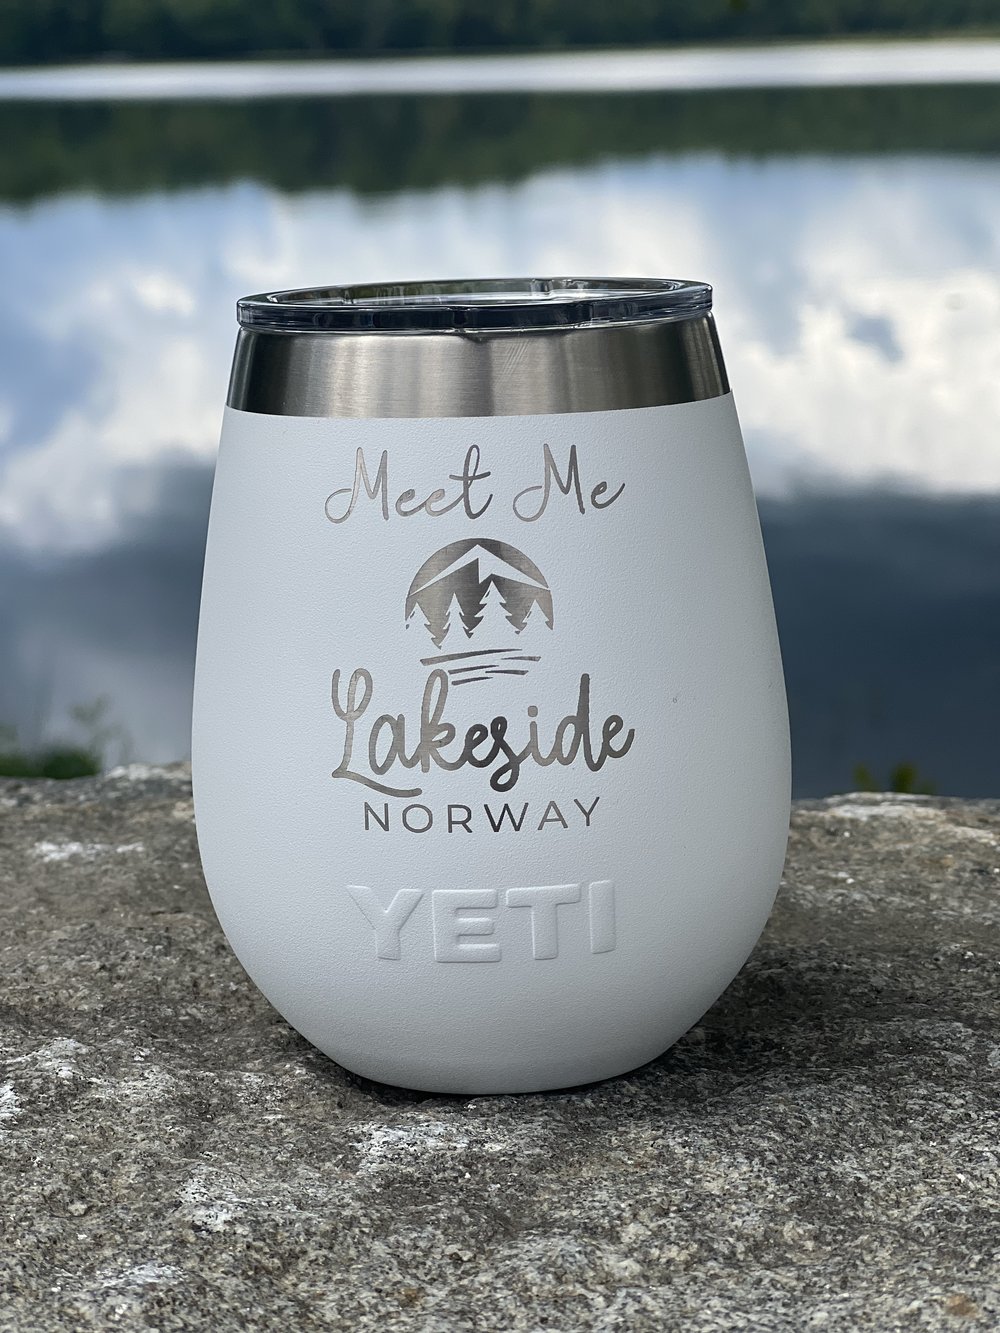 Meet Me Lakeside 10oz YETI Wine Tumbler — Lakeside Norway